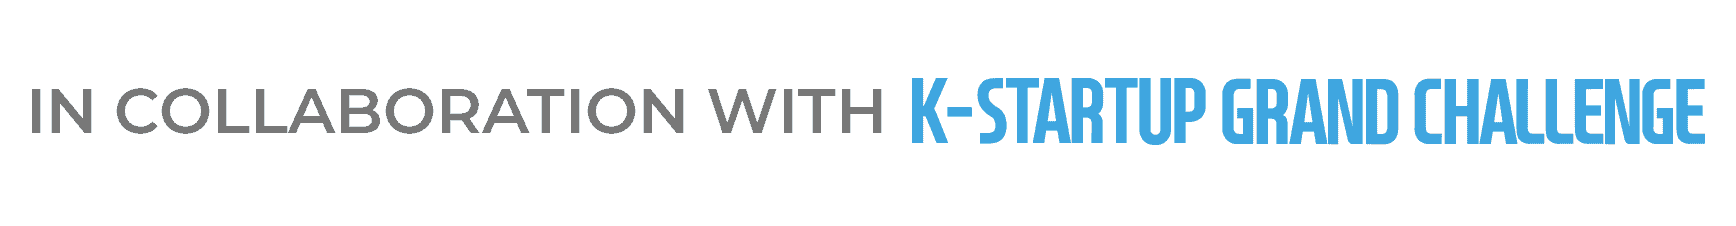 Why Should Latam Startups Apply To Korea's K-startup Grand Challenge Acceleration Program